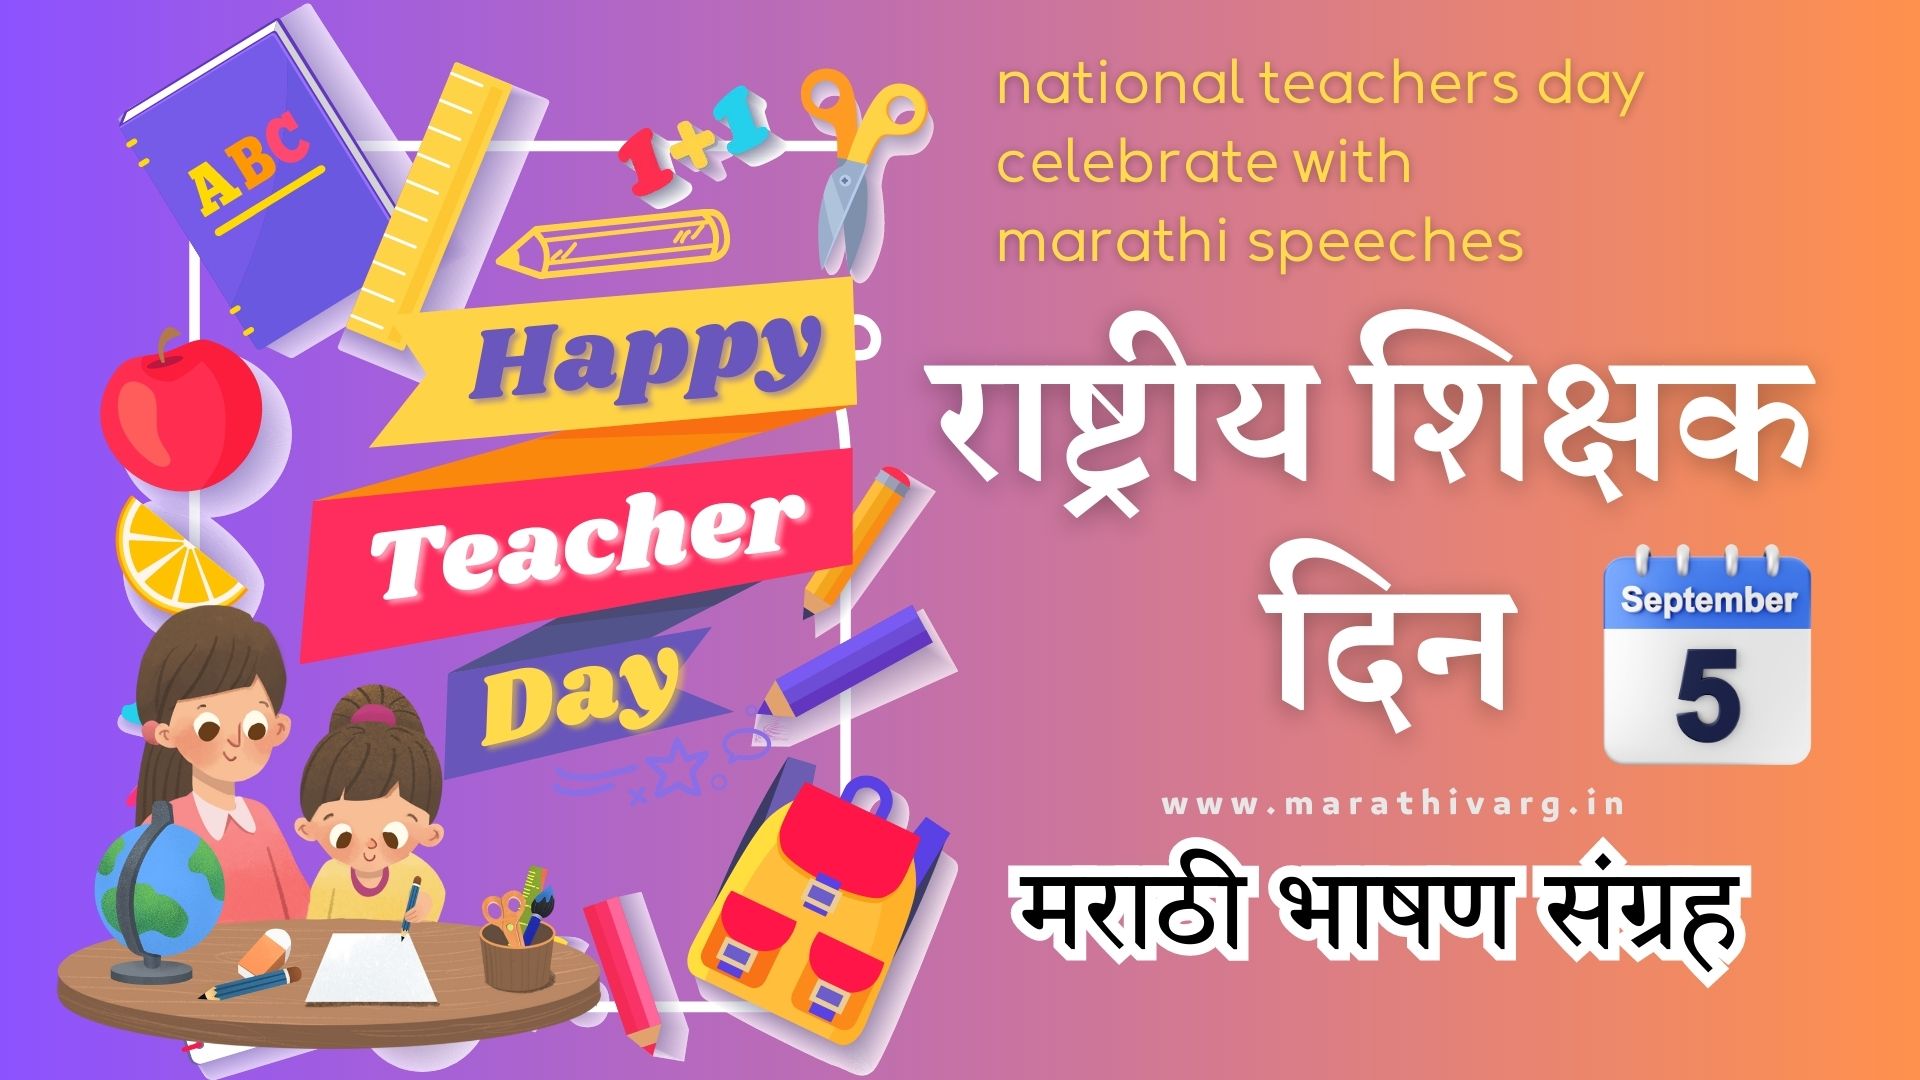 5 september: national teachers day celebrate with marathi speeches